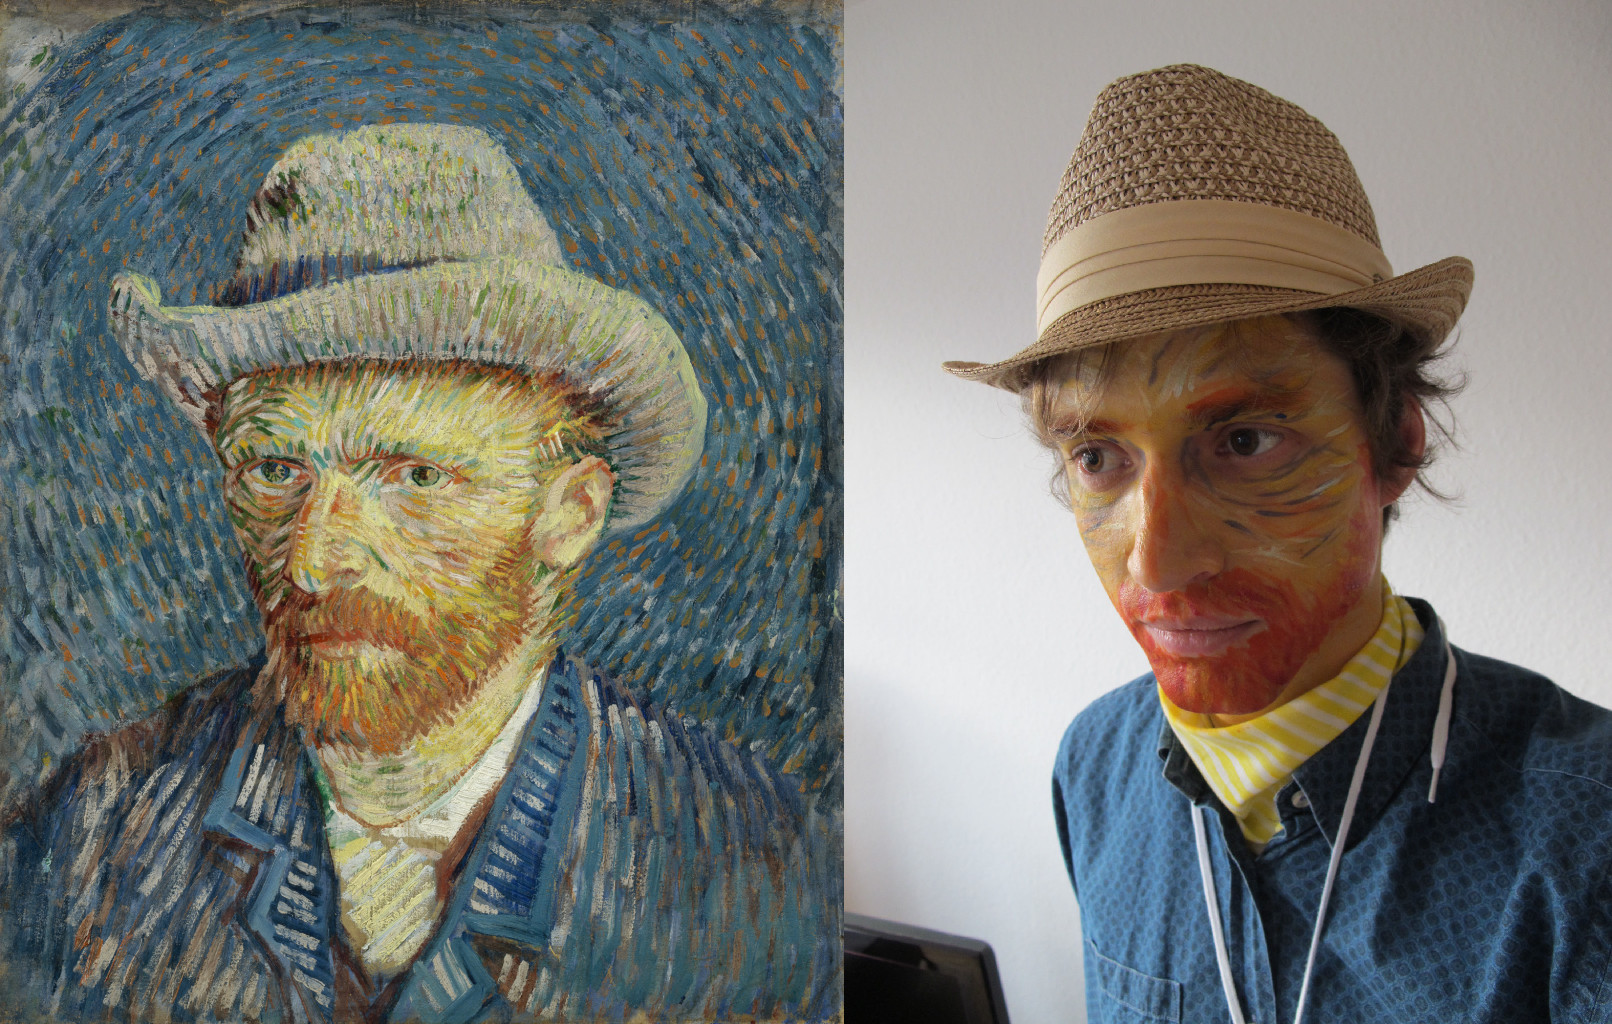 Self-Portrait with Grey Felt Hat, Vincent van Gogh (1853-1890) vanGo’d